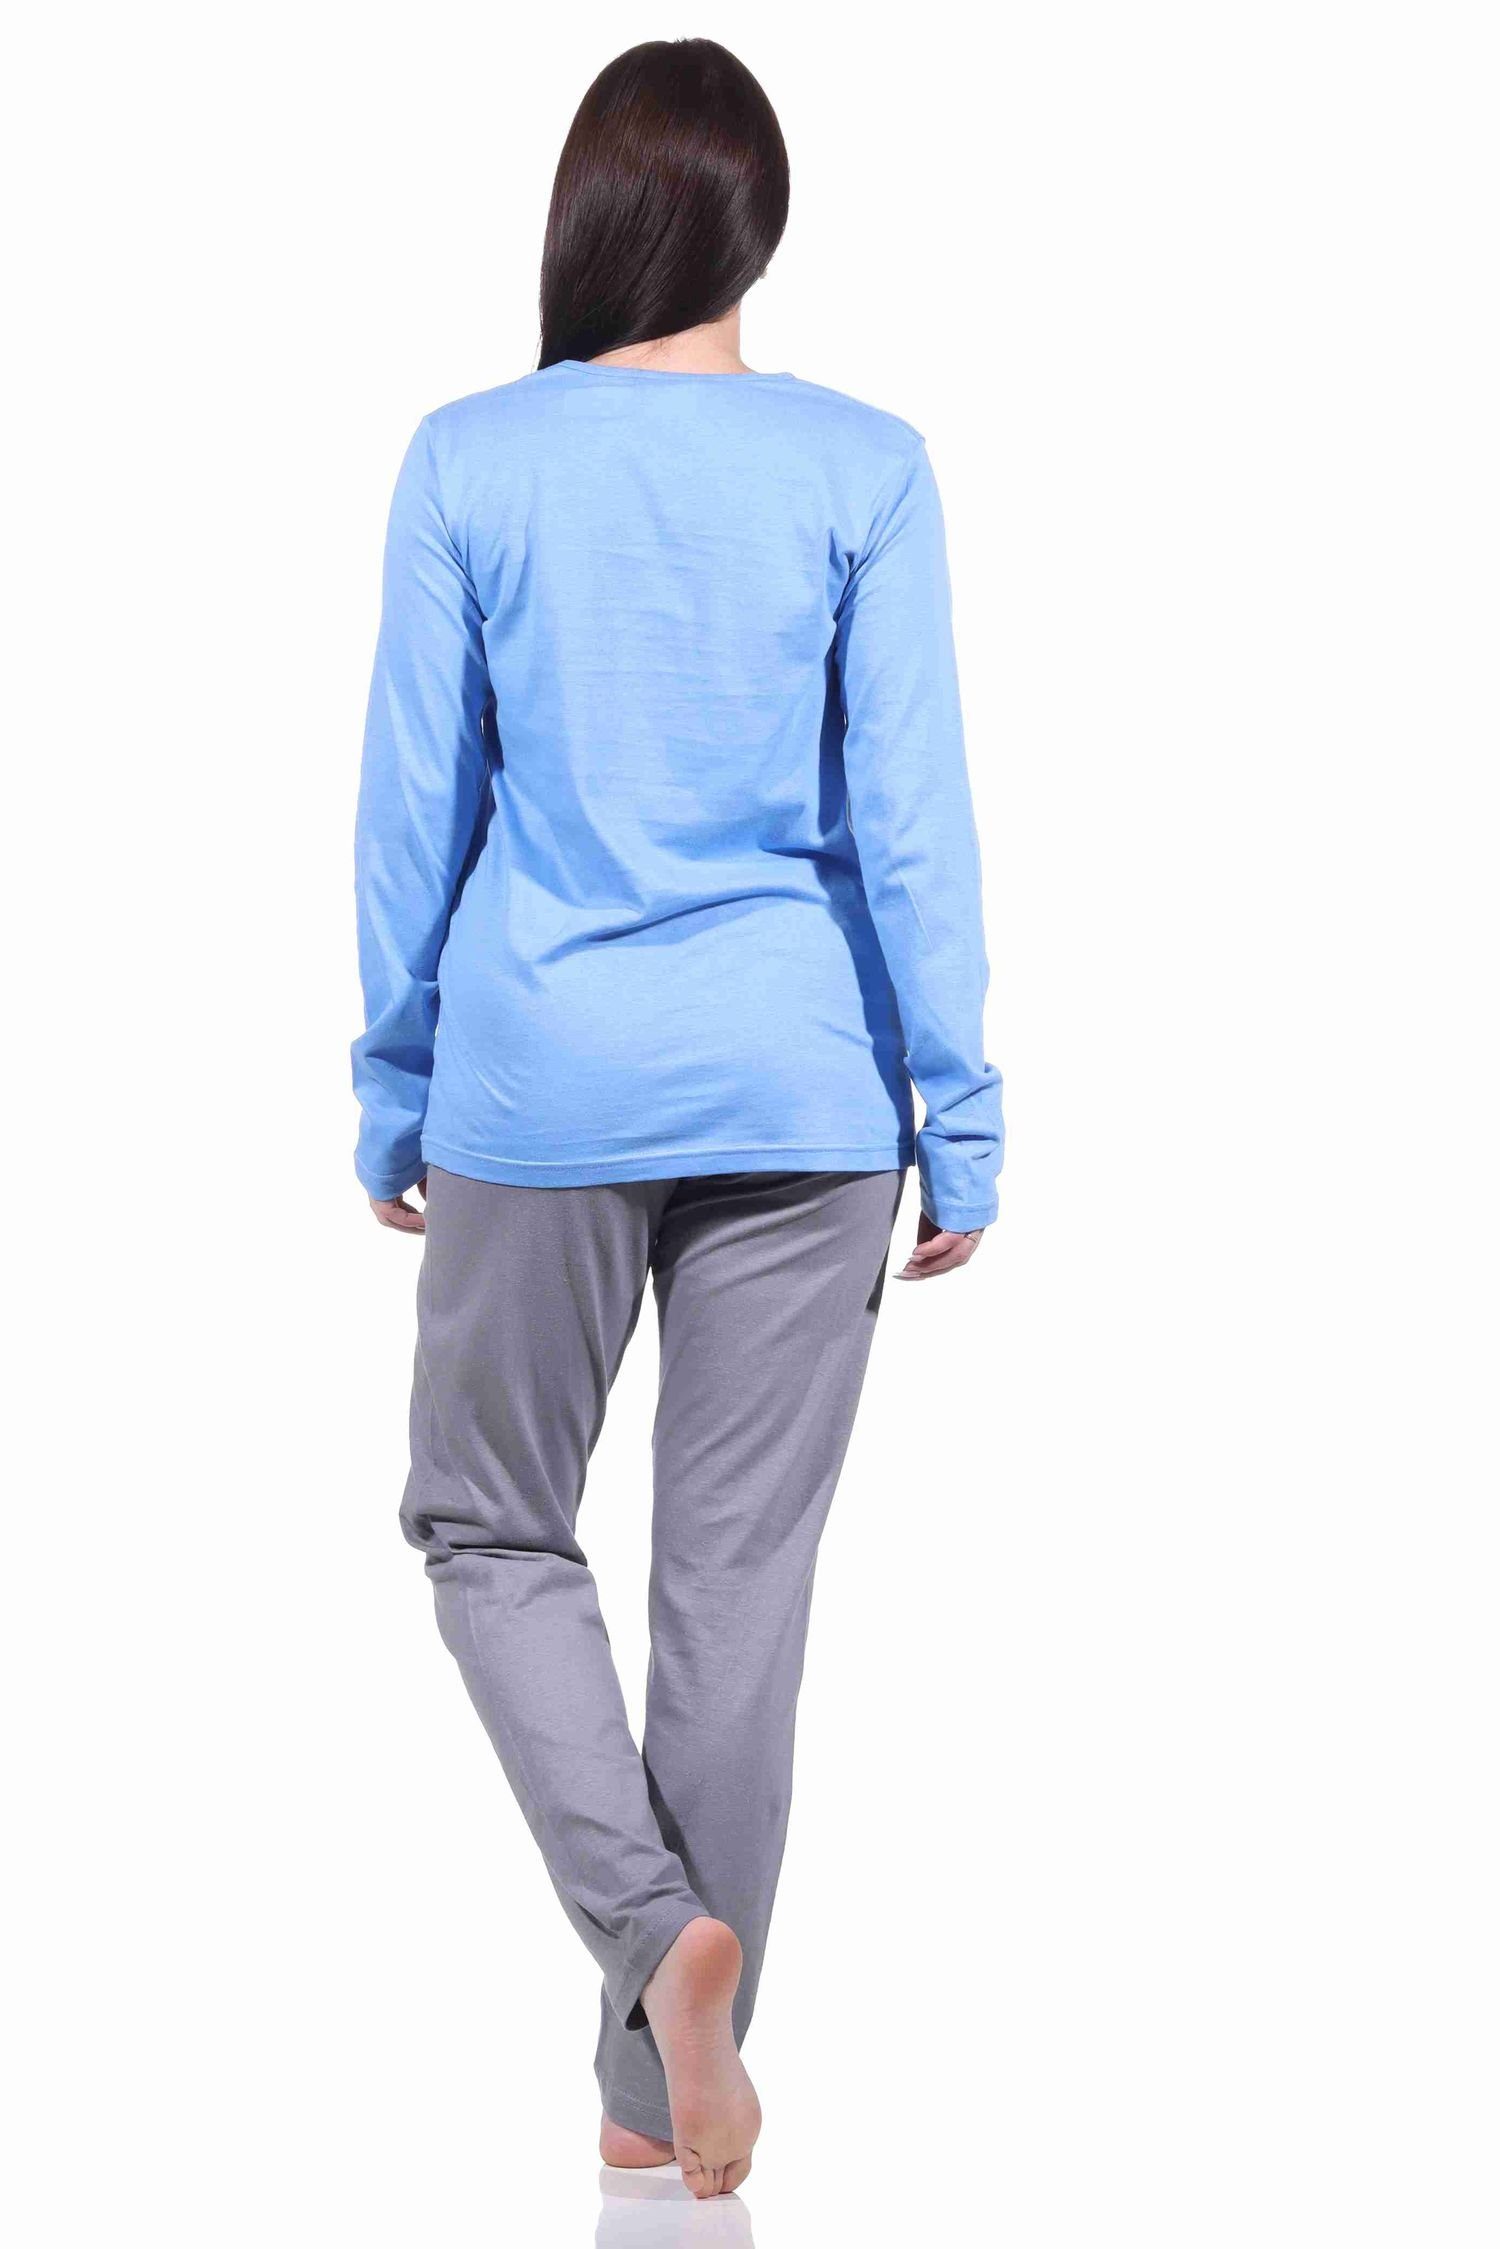 mit by 212 Pyjama - Normann 902 10 blau Schlafanzug Frontprint Damen lang RELAX